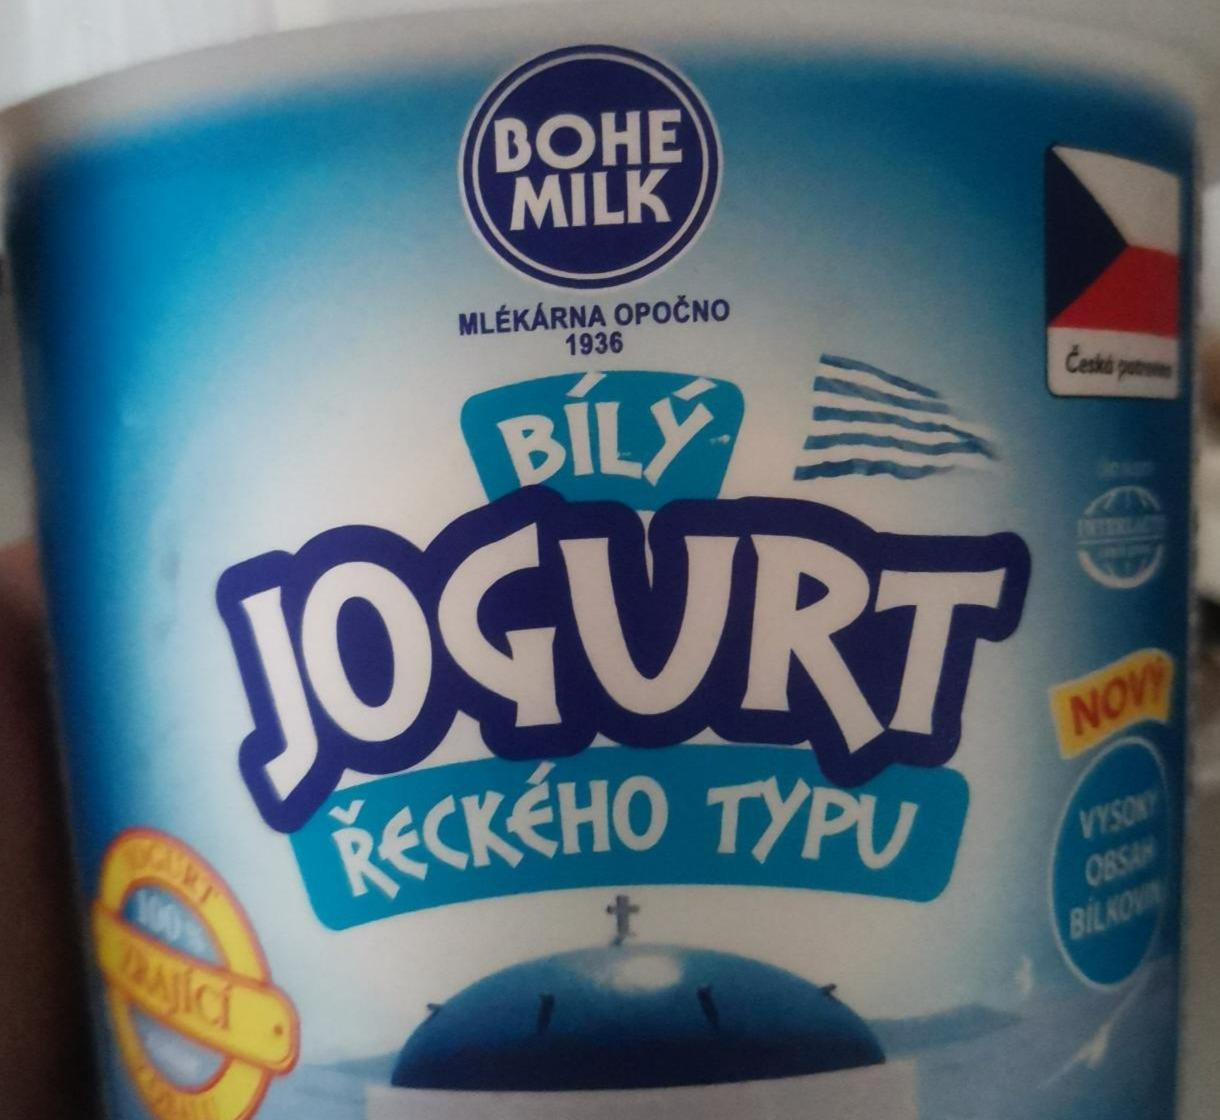 Fotografie - biely jogurt gréckeho typu bohe milk